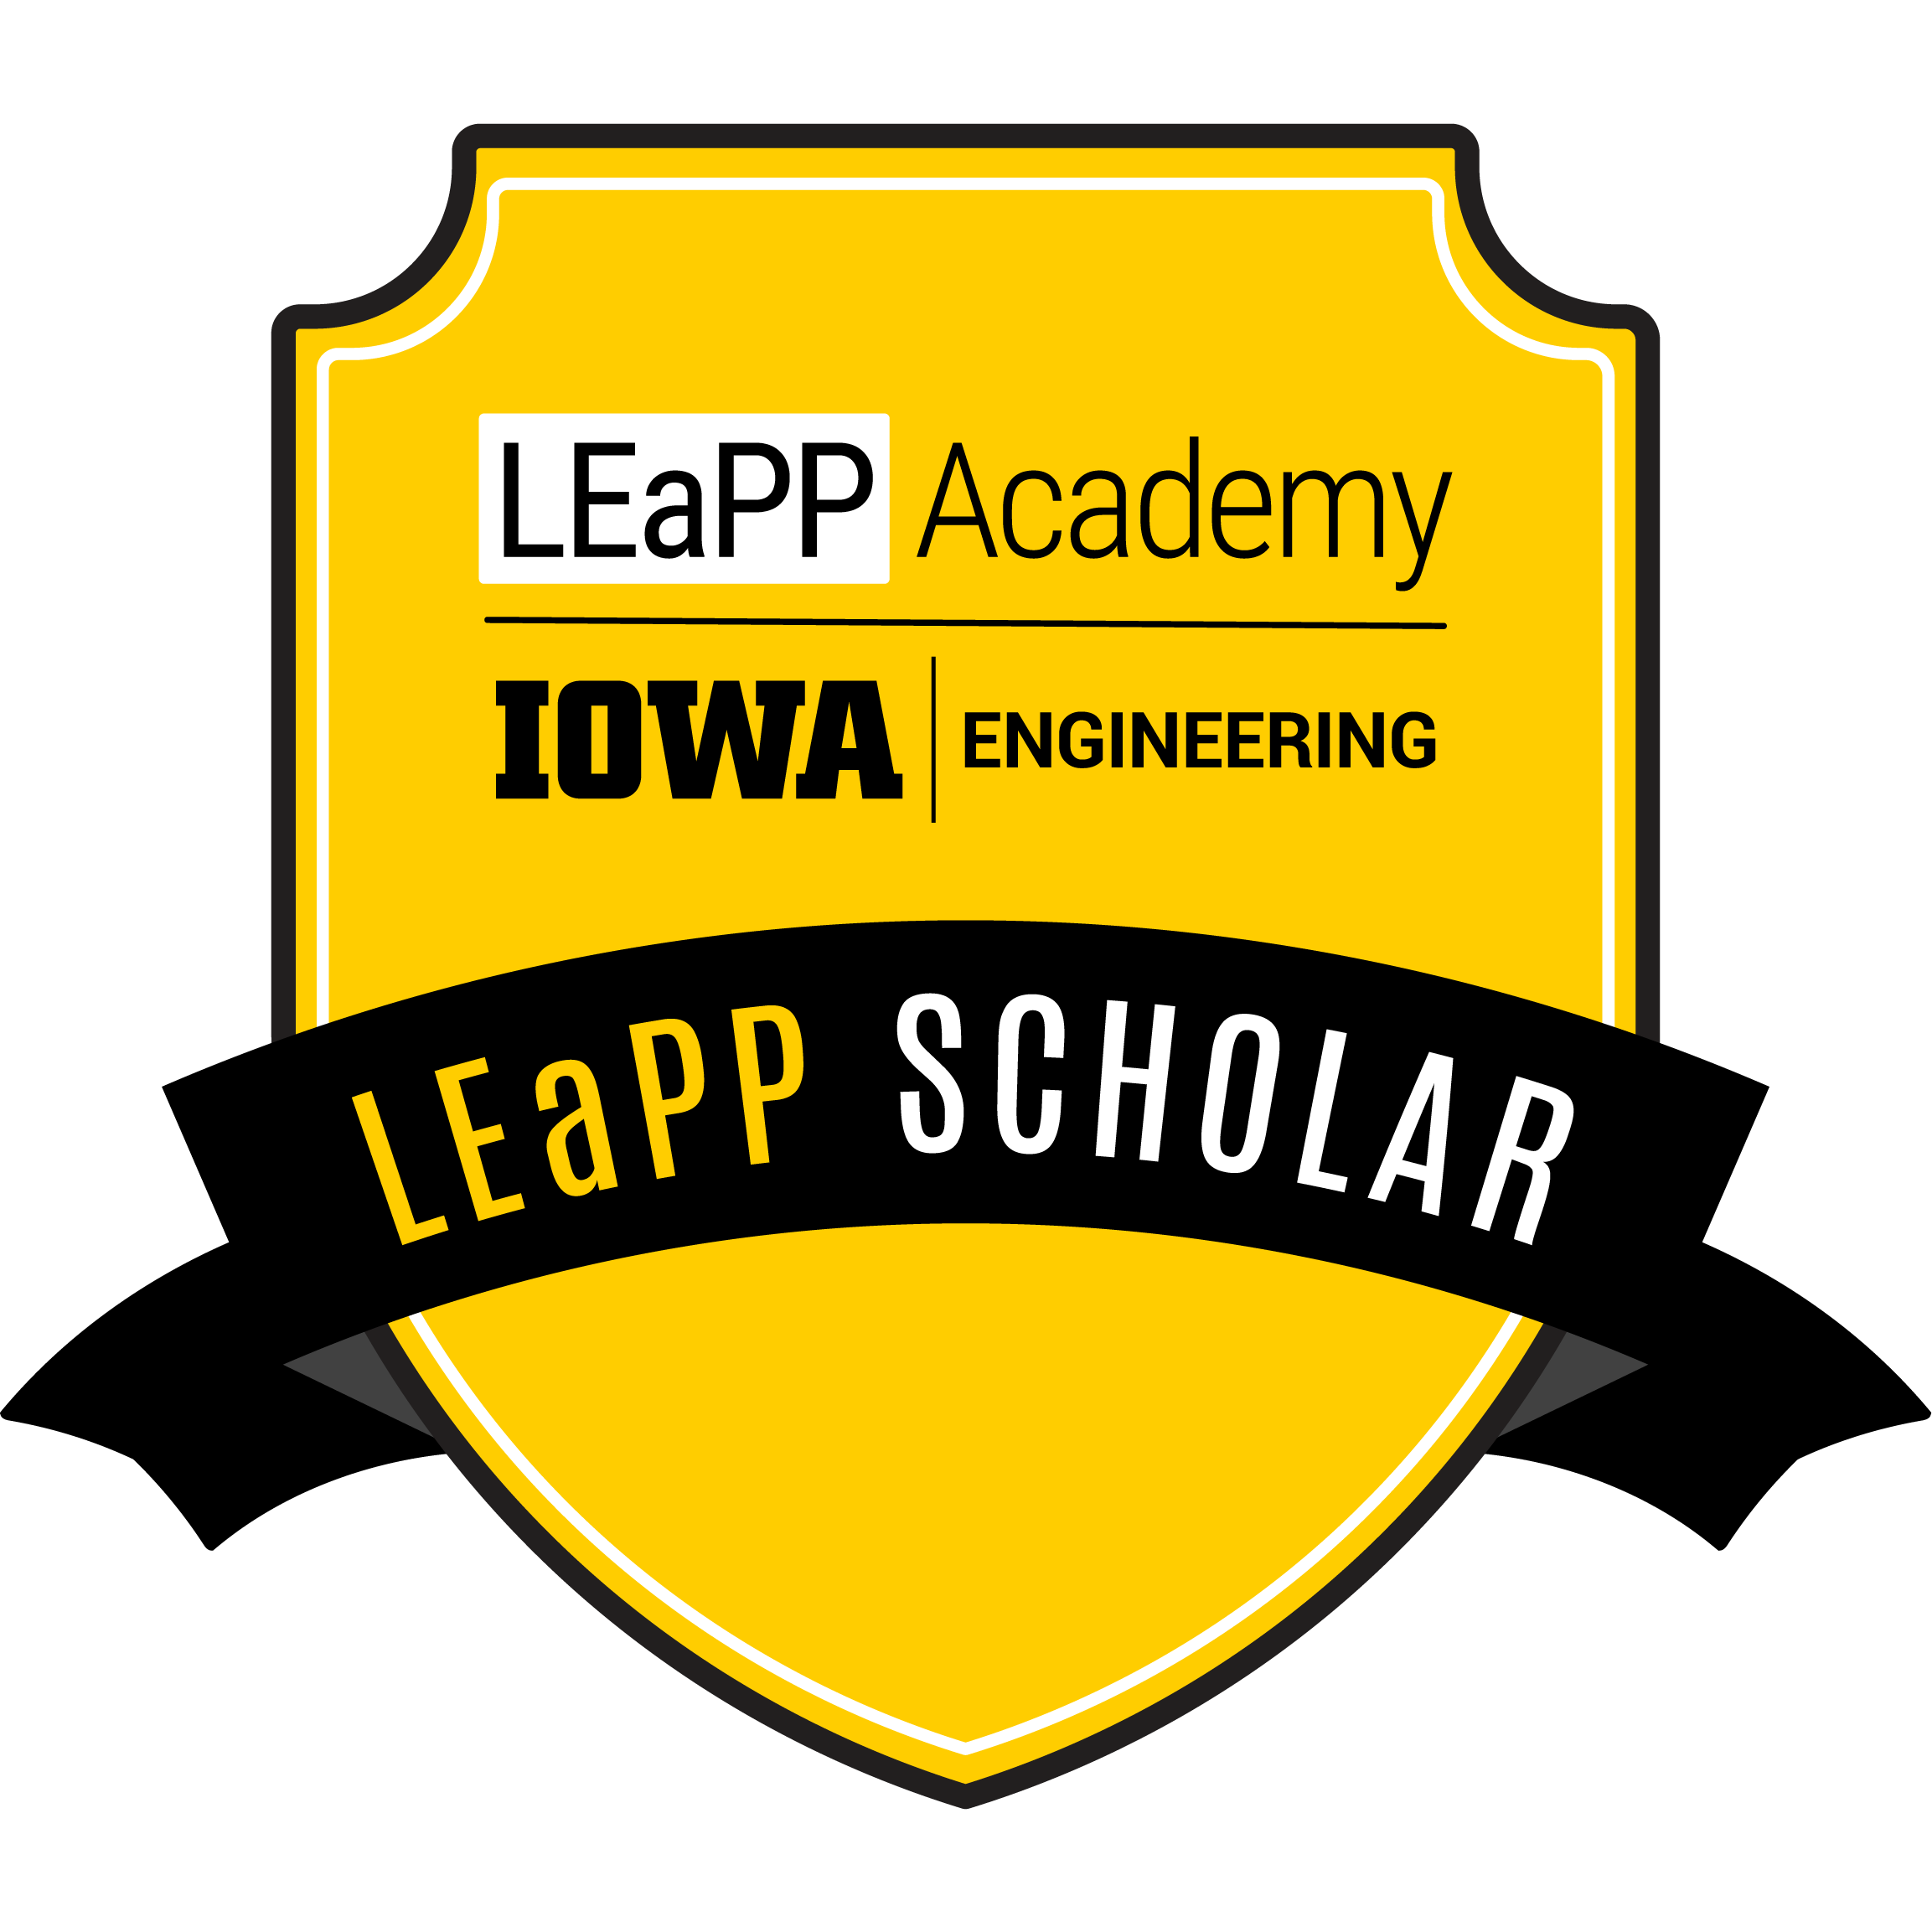 LEaPP Academy Scholar badge